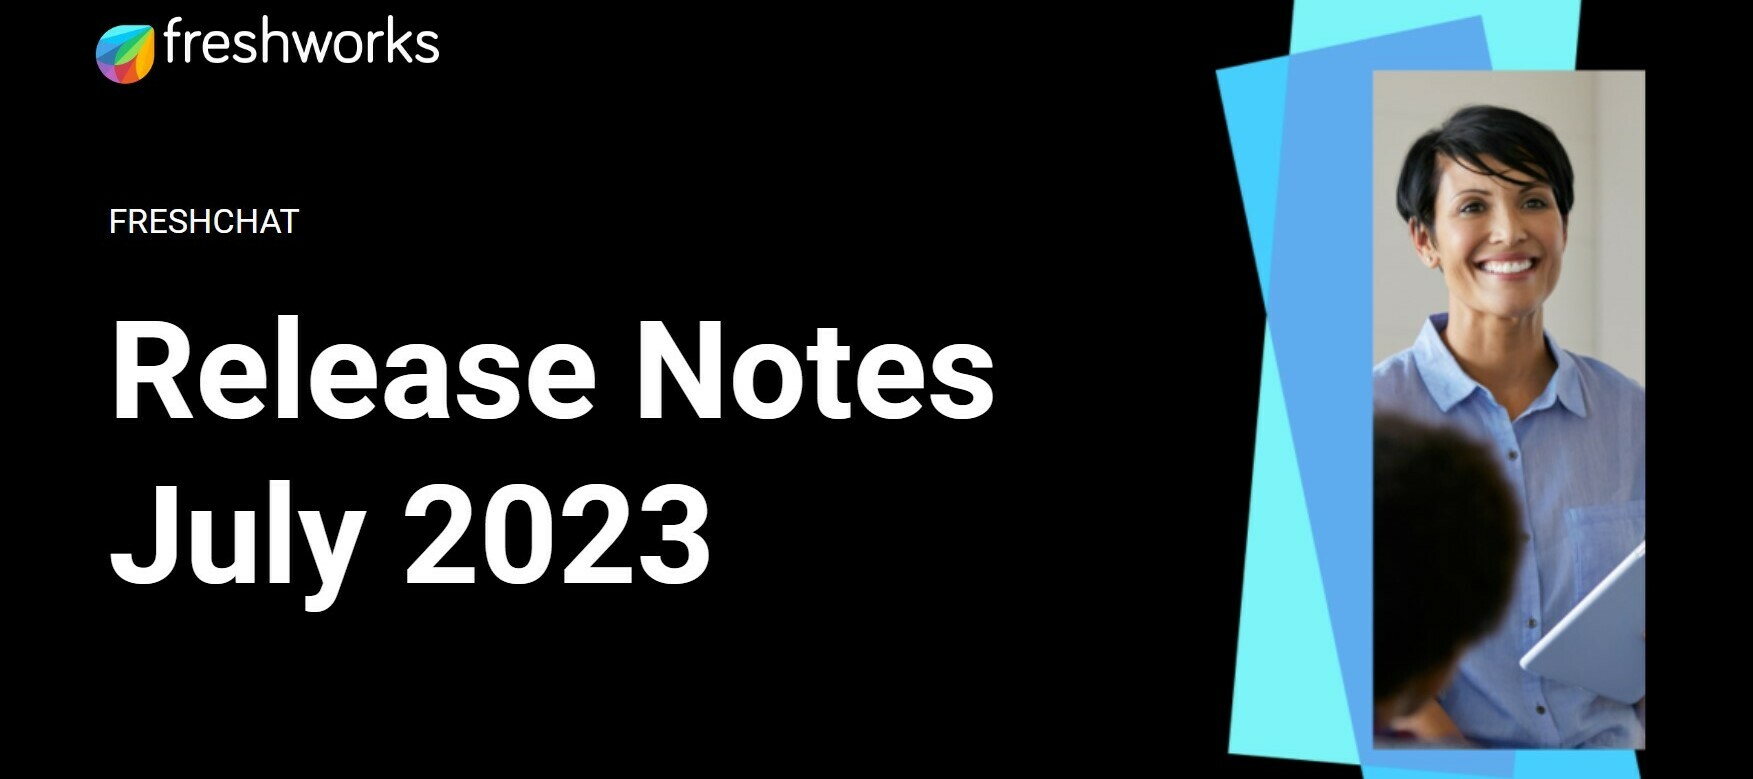 Freshchat Release Notes - July 2023